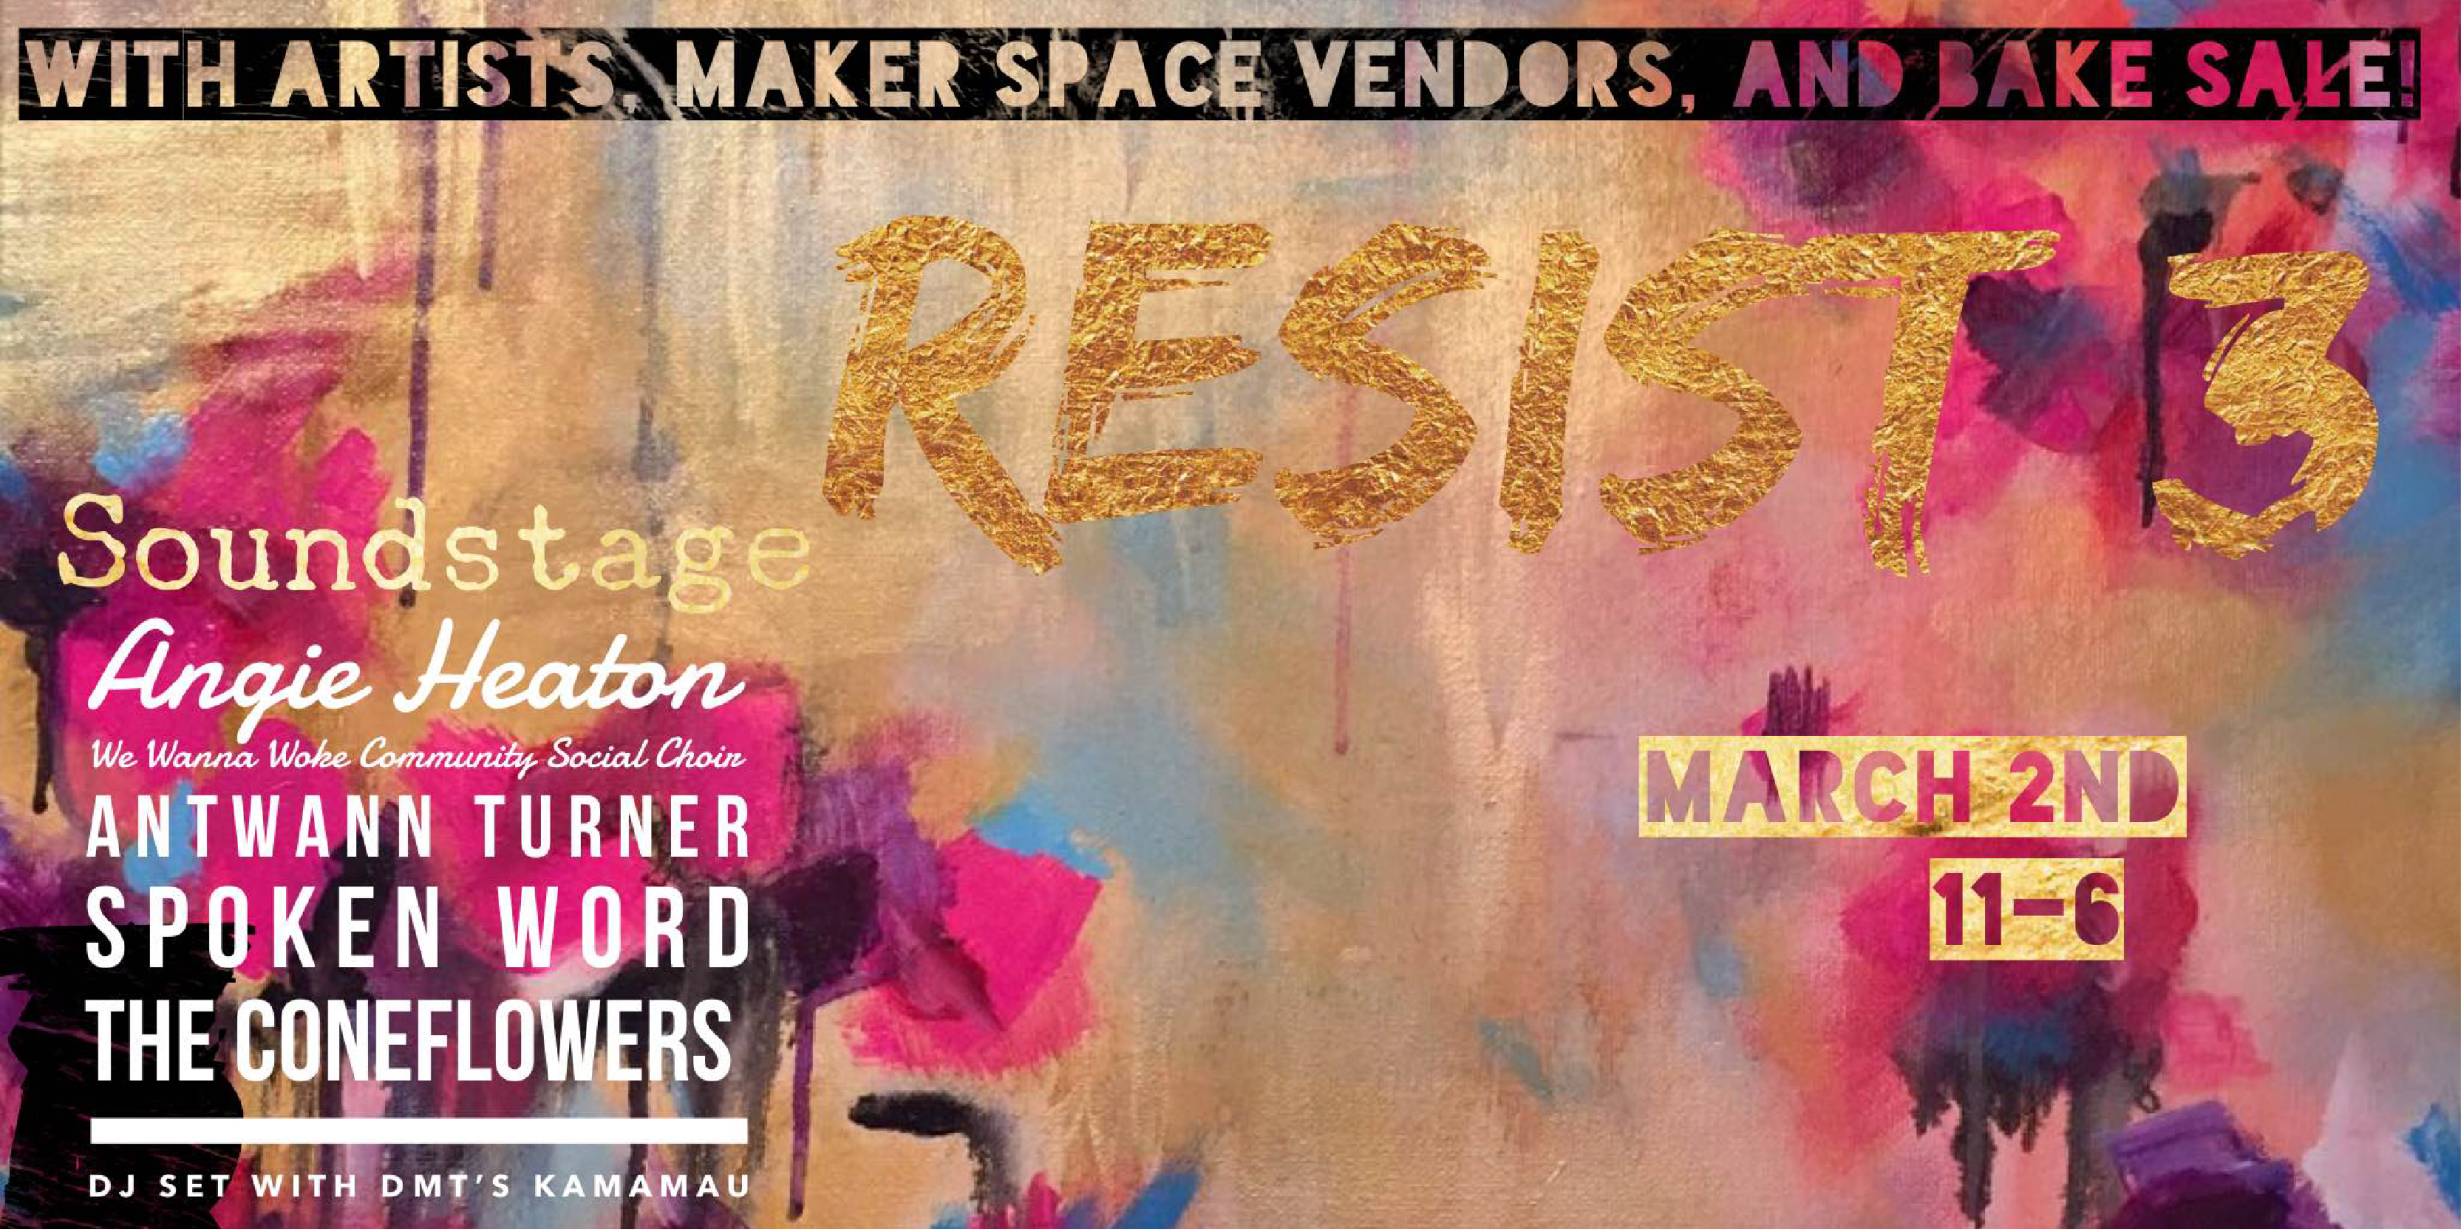 Resist 3 art event unites artists to raise money for local organizations